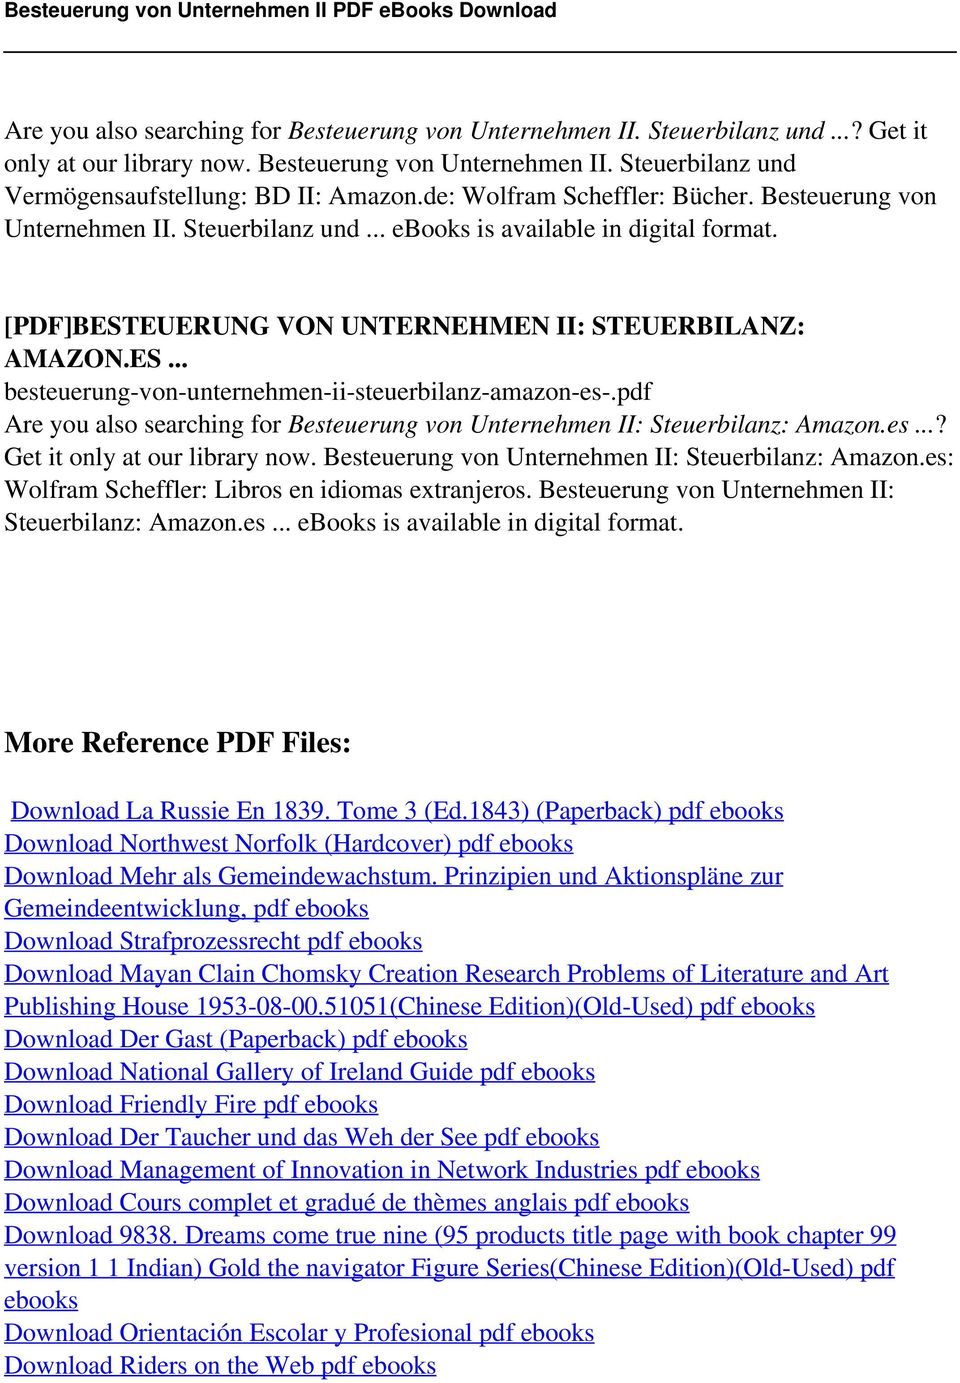 pdf Are you also searching for Besteuerung von Unternehmen II: Steuerbilanz: Amazon.es...? Get it only at our library now. Besteuerung von Unternehmen II: Steuerbilanz: Amazon.es: Wolfram Scheffler: Libros en idiomas extranjeros.